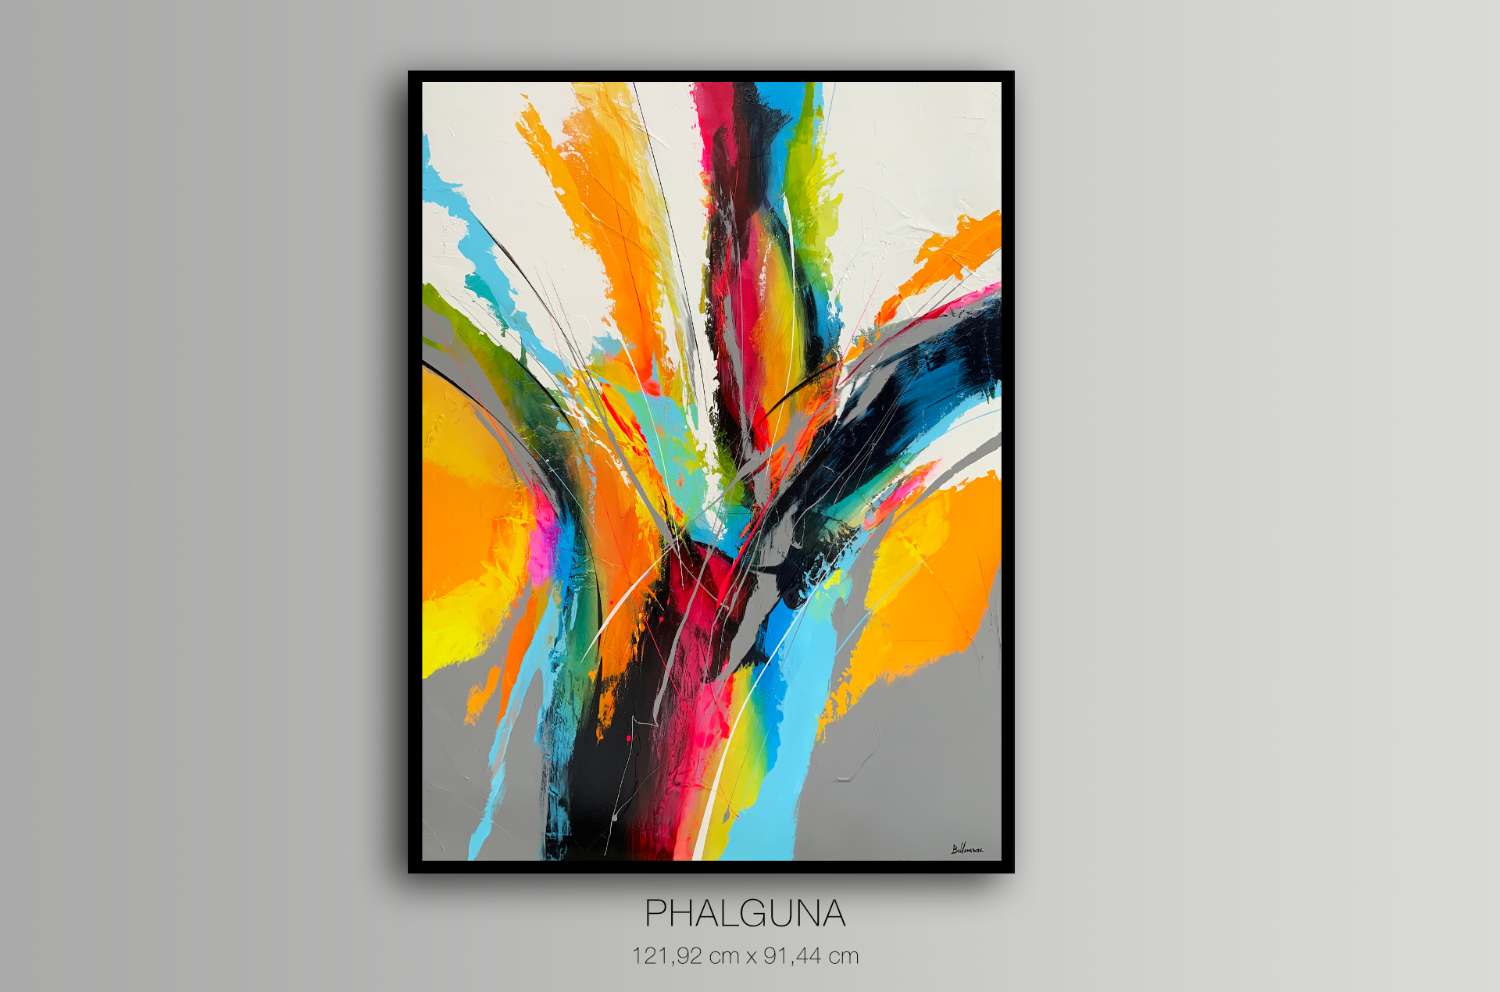 Phalguna - Featured